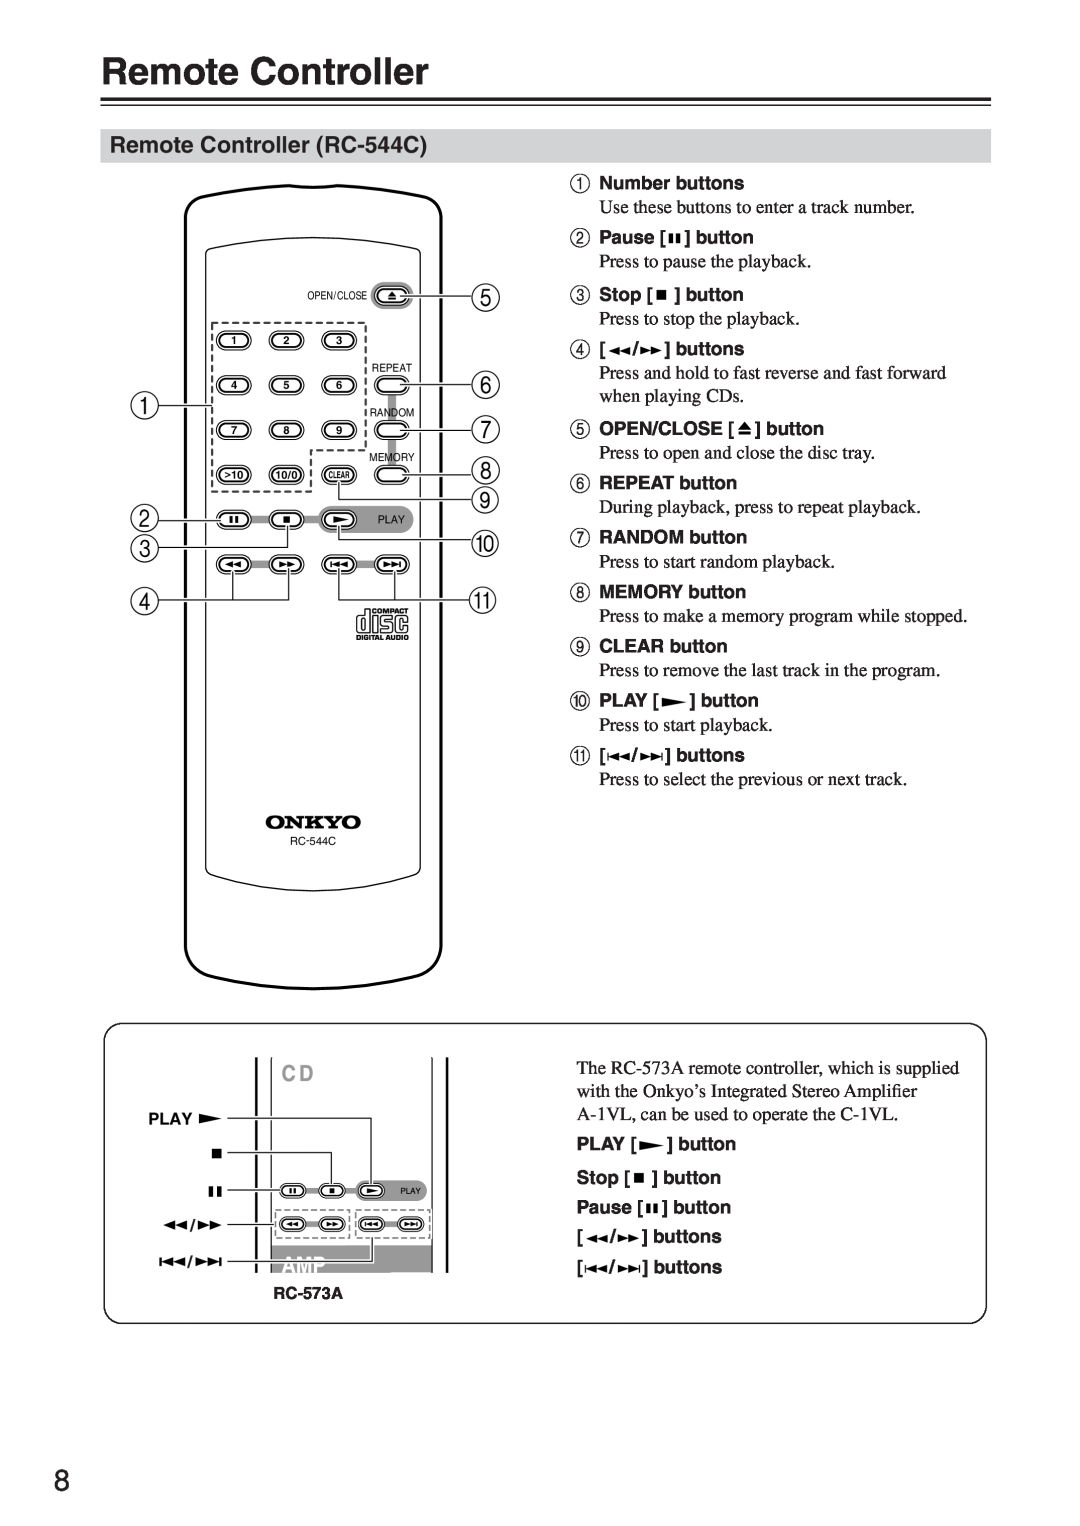 Onkyo C-1VL instruction manual Remote Controller RC-544C 